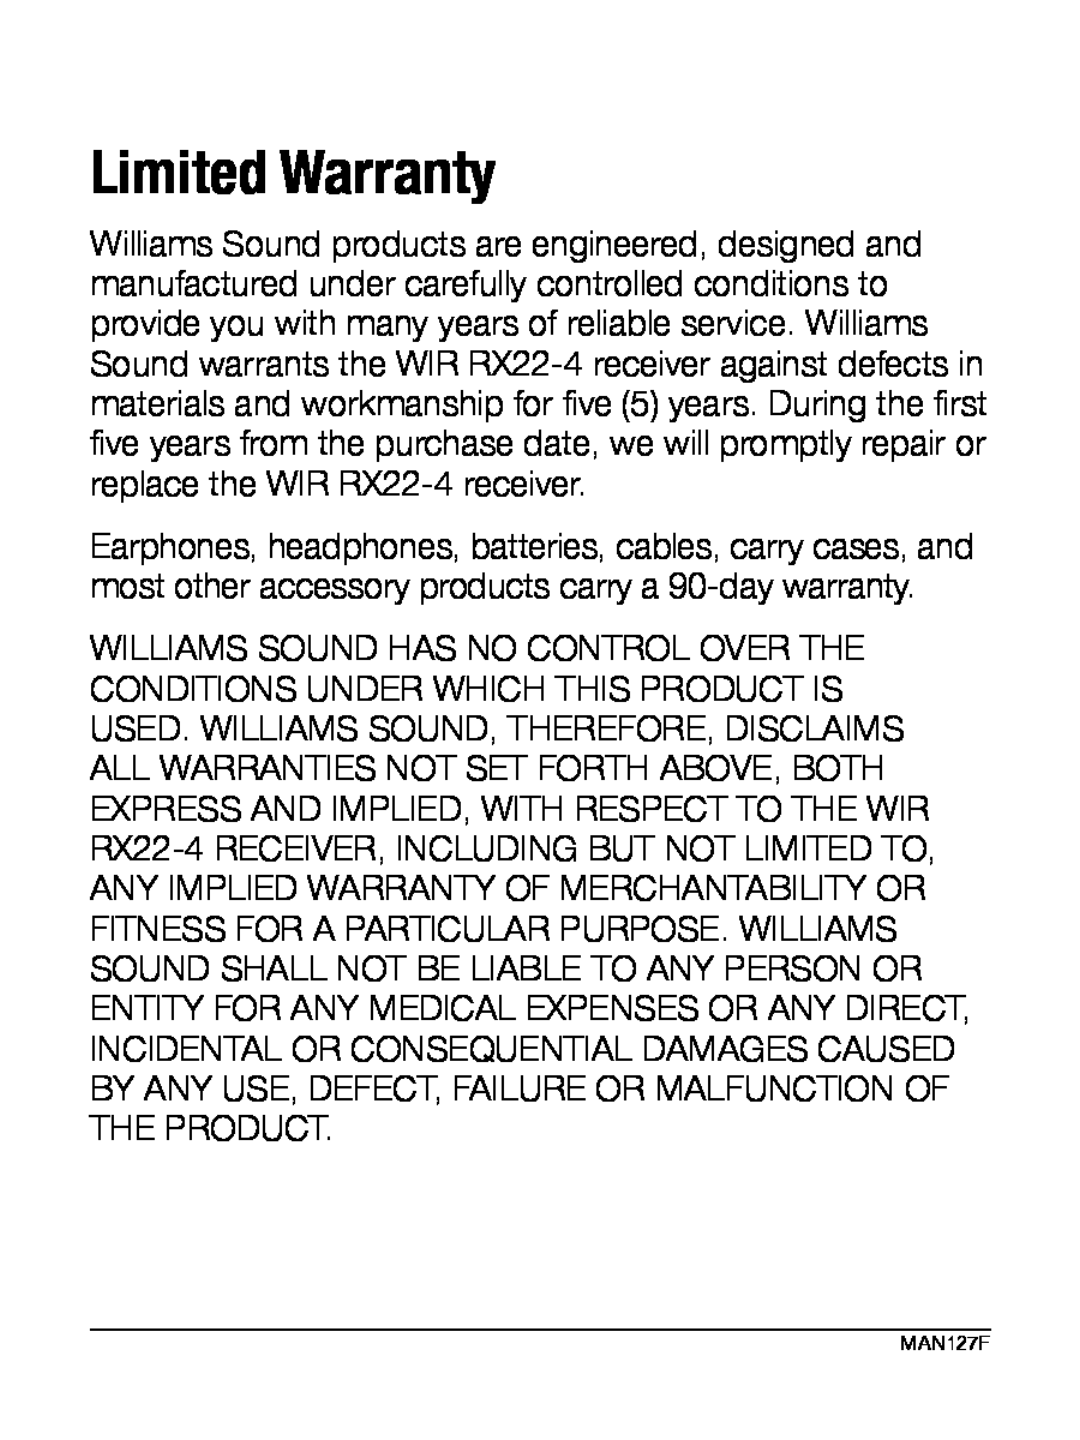 Williams Sound WIR RX22-4 manual Limited Warranty 